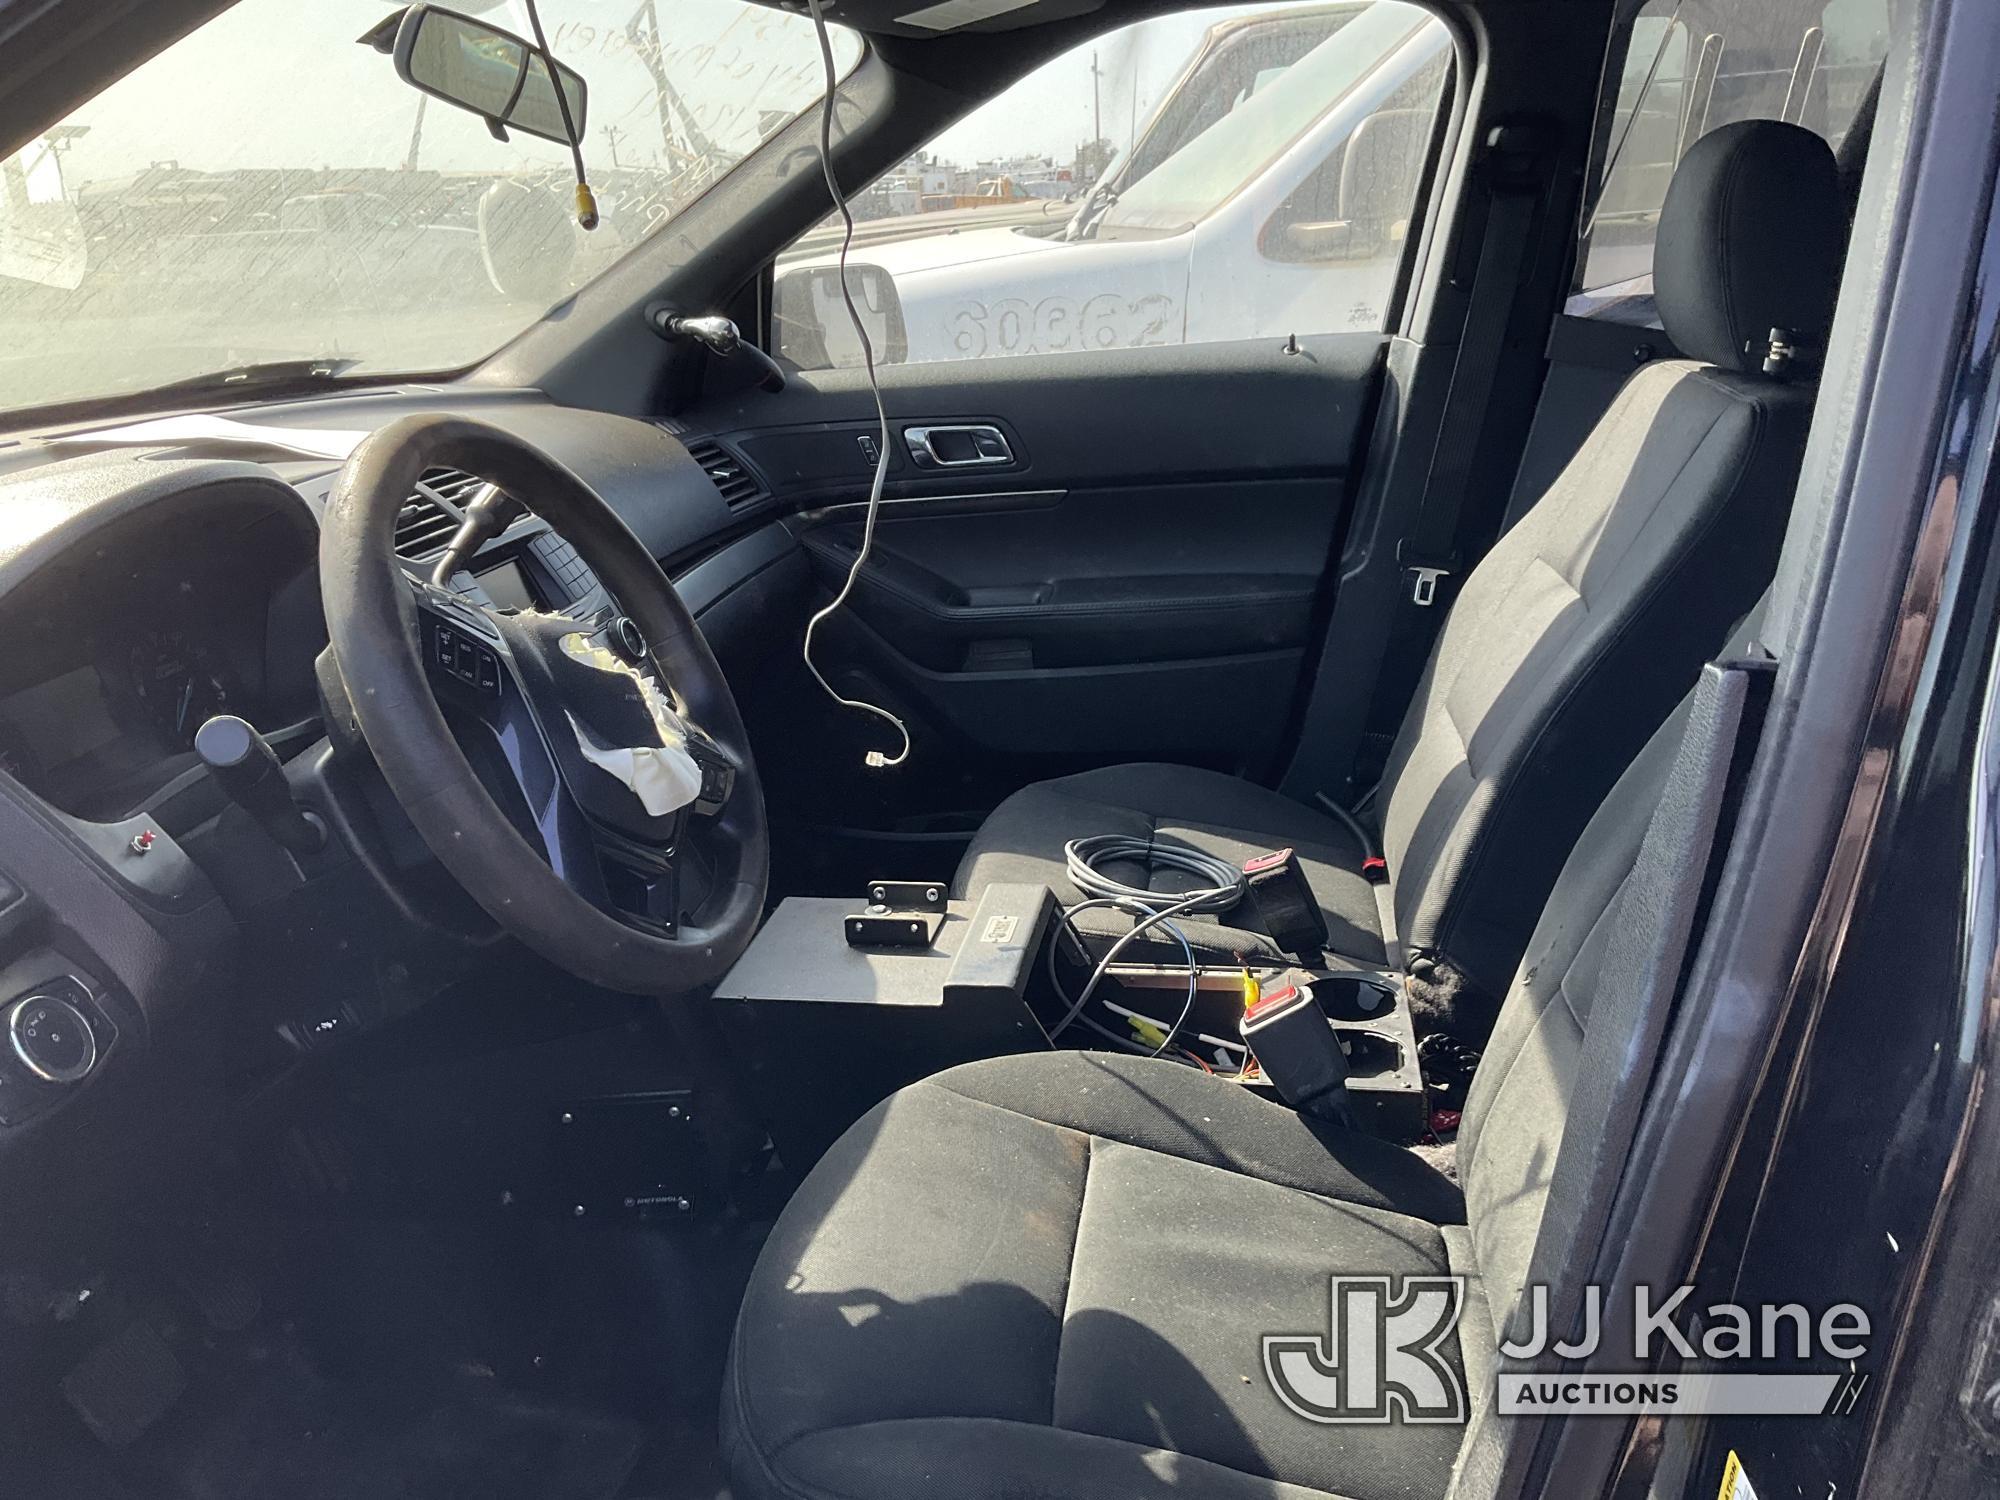 (Jurupa Valley, CA) 2017 Ford Explorer AWD Police Interceptor Sport Utility Vehicle Vehicle Wrecked,